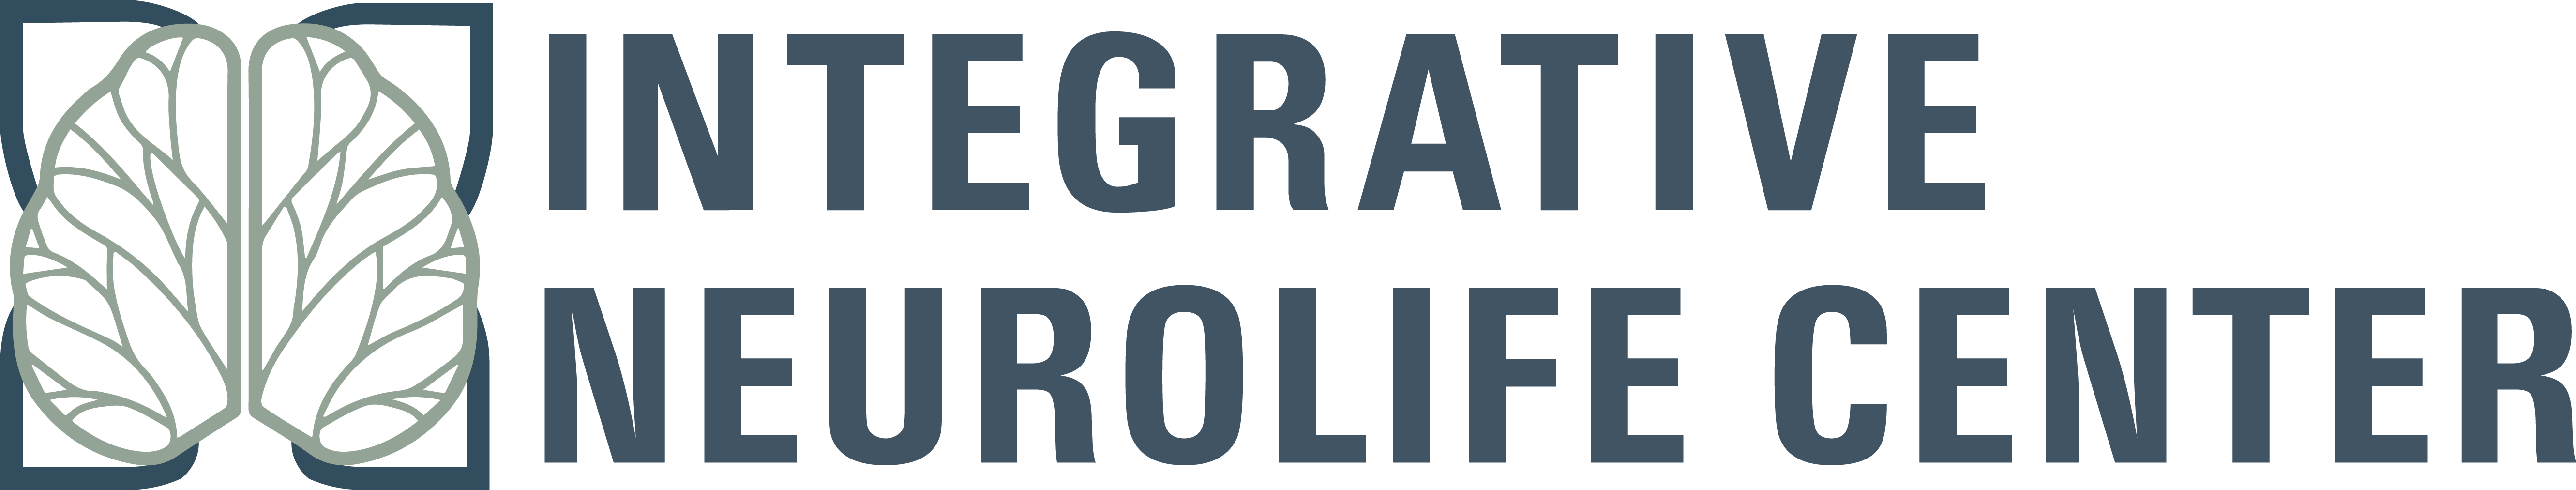 Integrative Neurolife Center logo